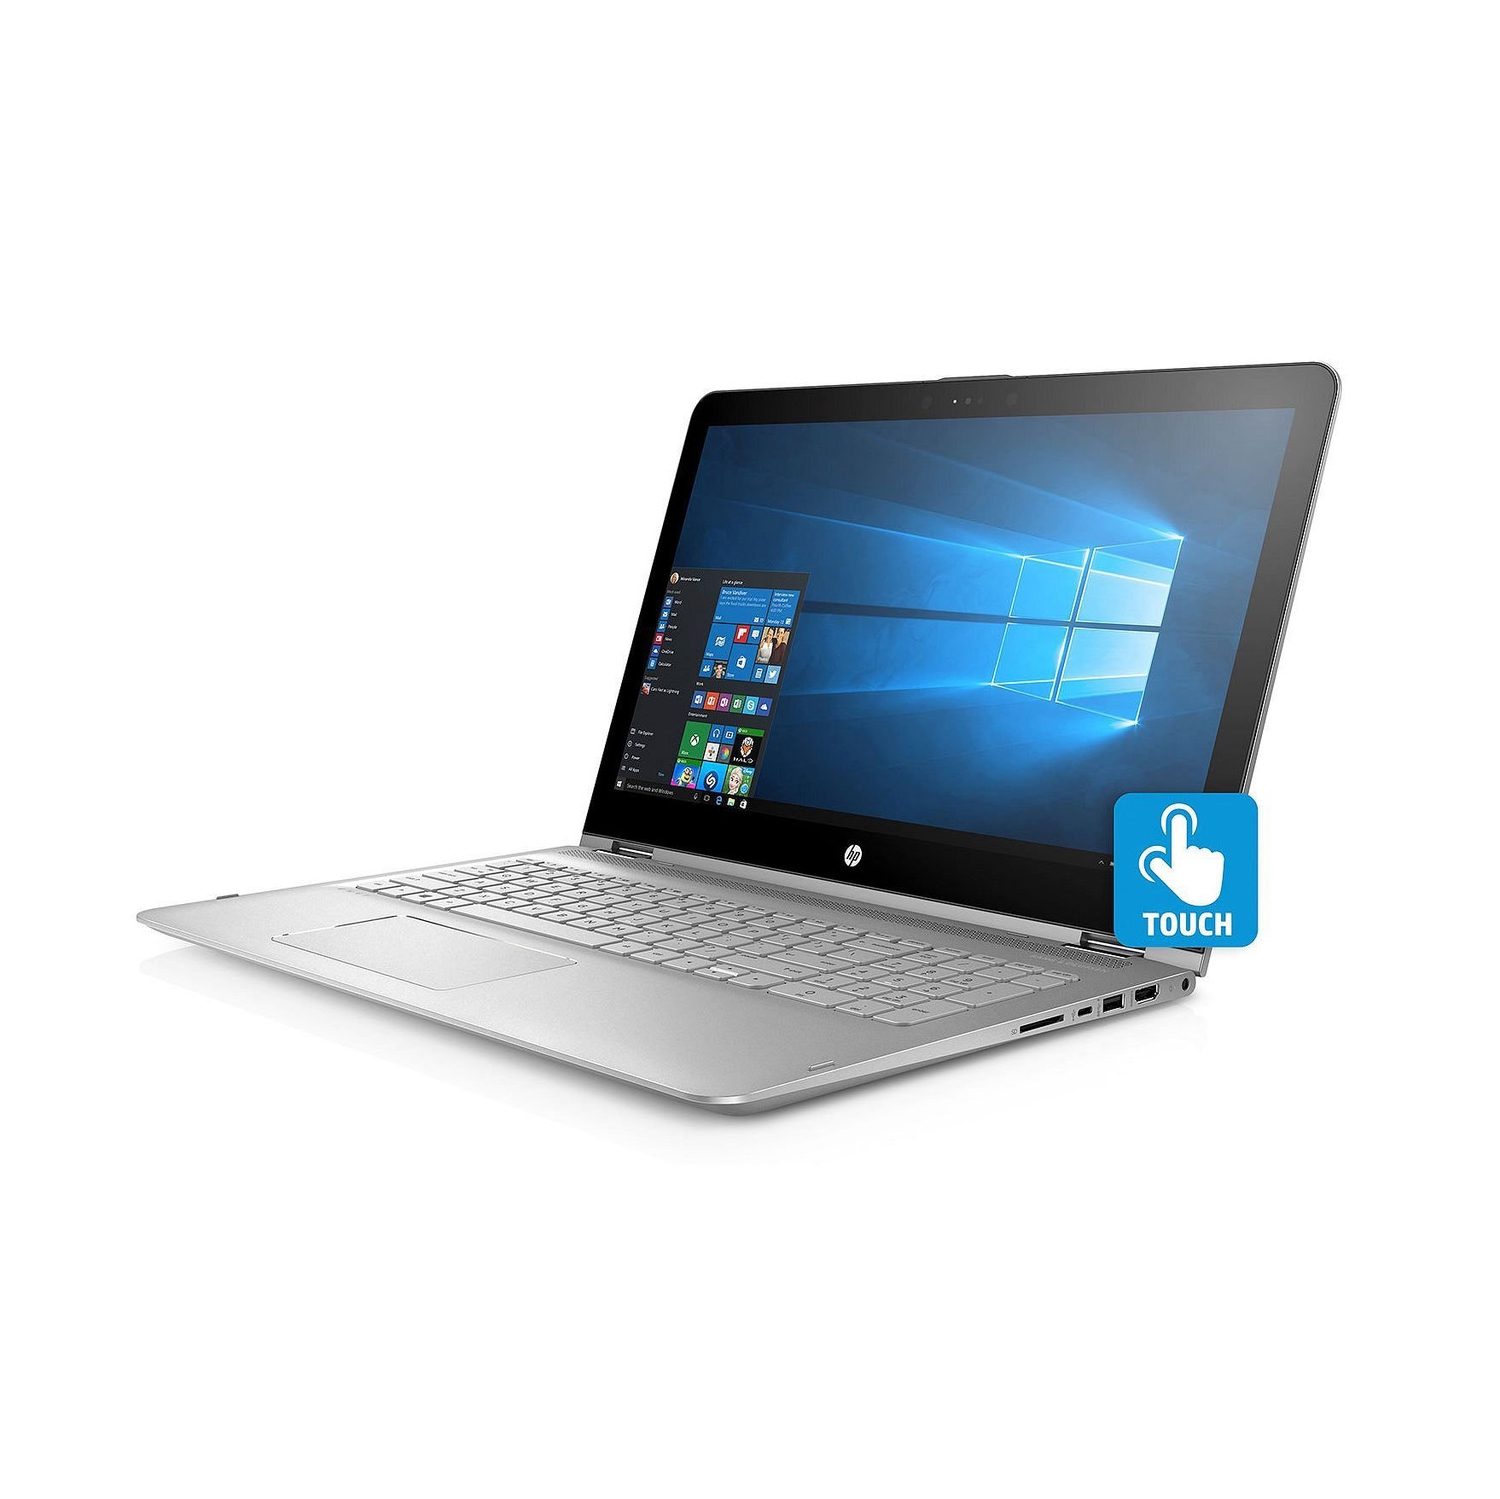 HP ENVY X360 15T-AQ200 15.6" FHD 1920 x 1080p Laptop, Core i7 8th Gen, 8Gb RAM, 256Gb SSD, Windows 11 (Refurbished)